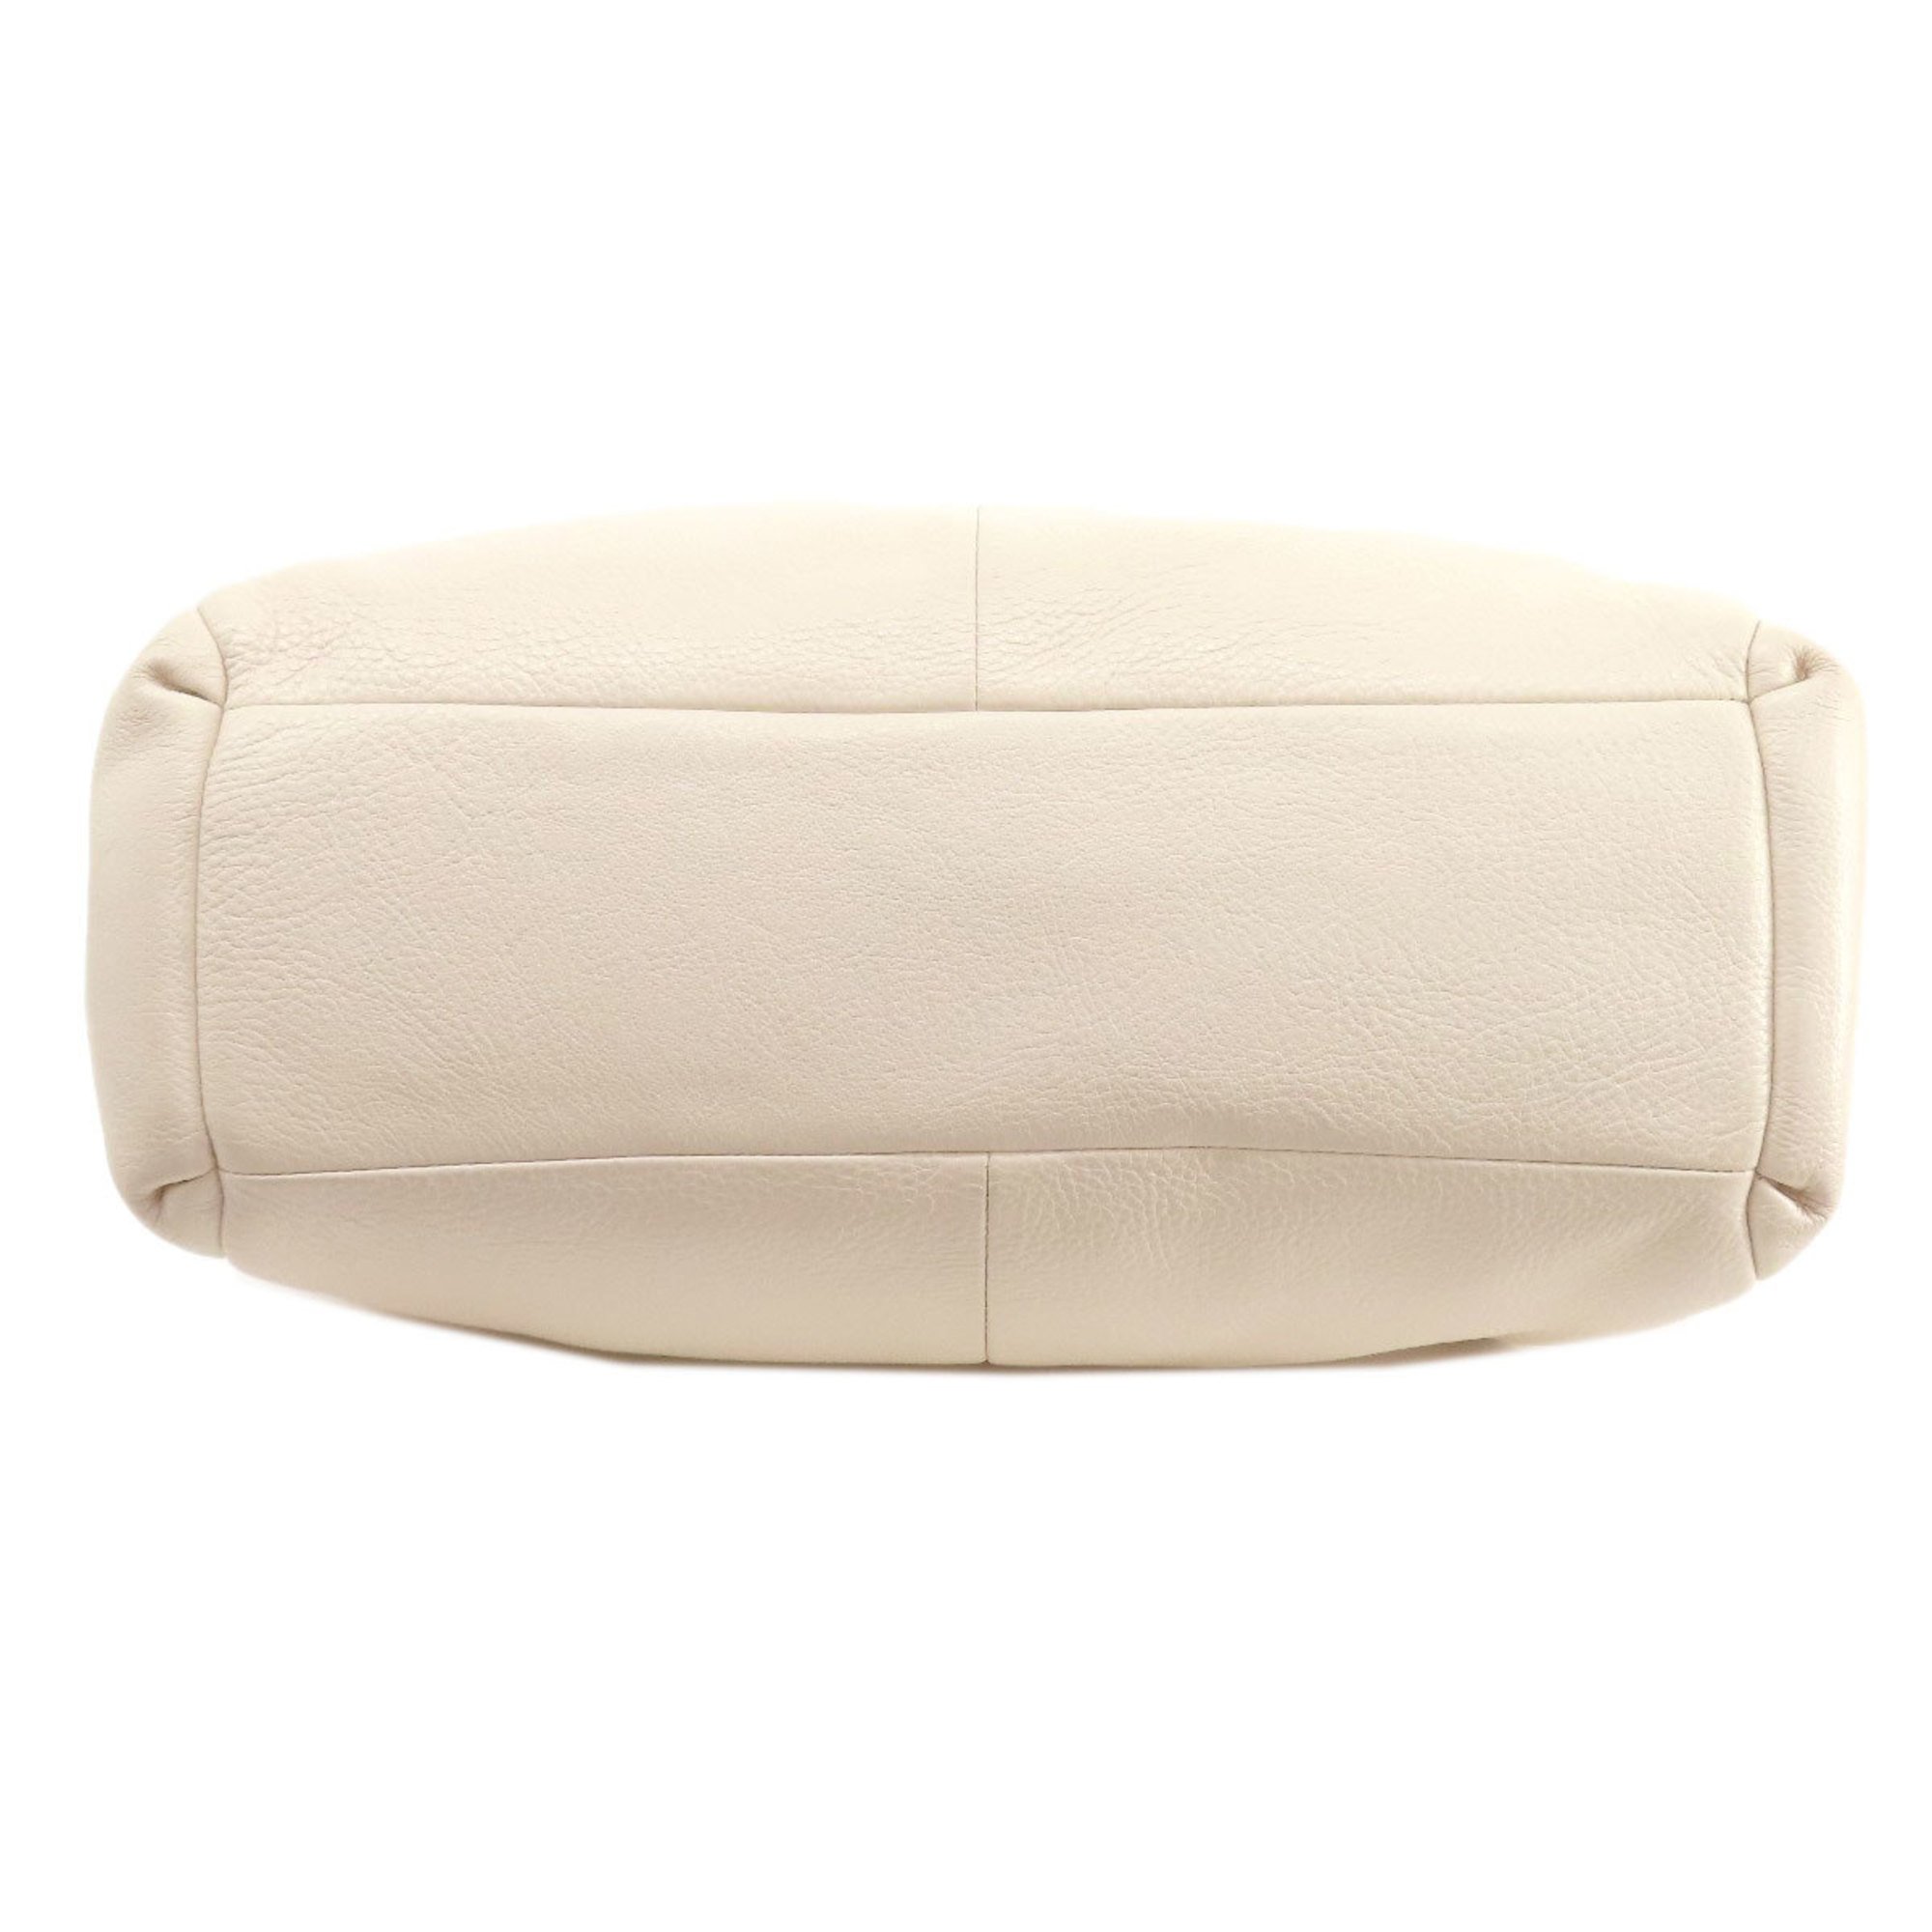 Coach F34495 Design Tote Bag Leather Women's